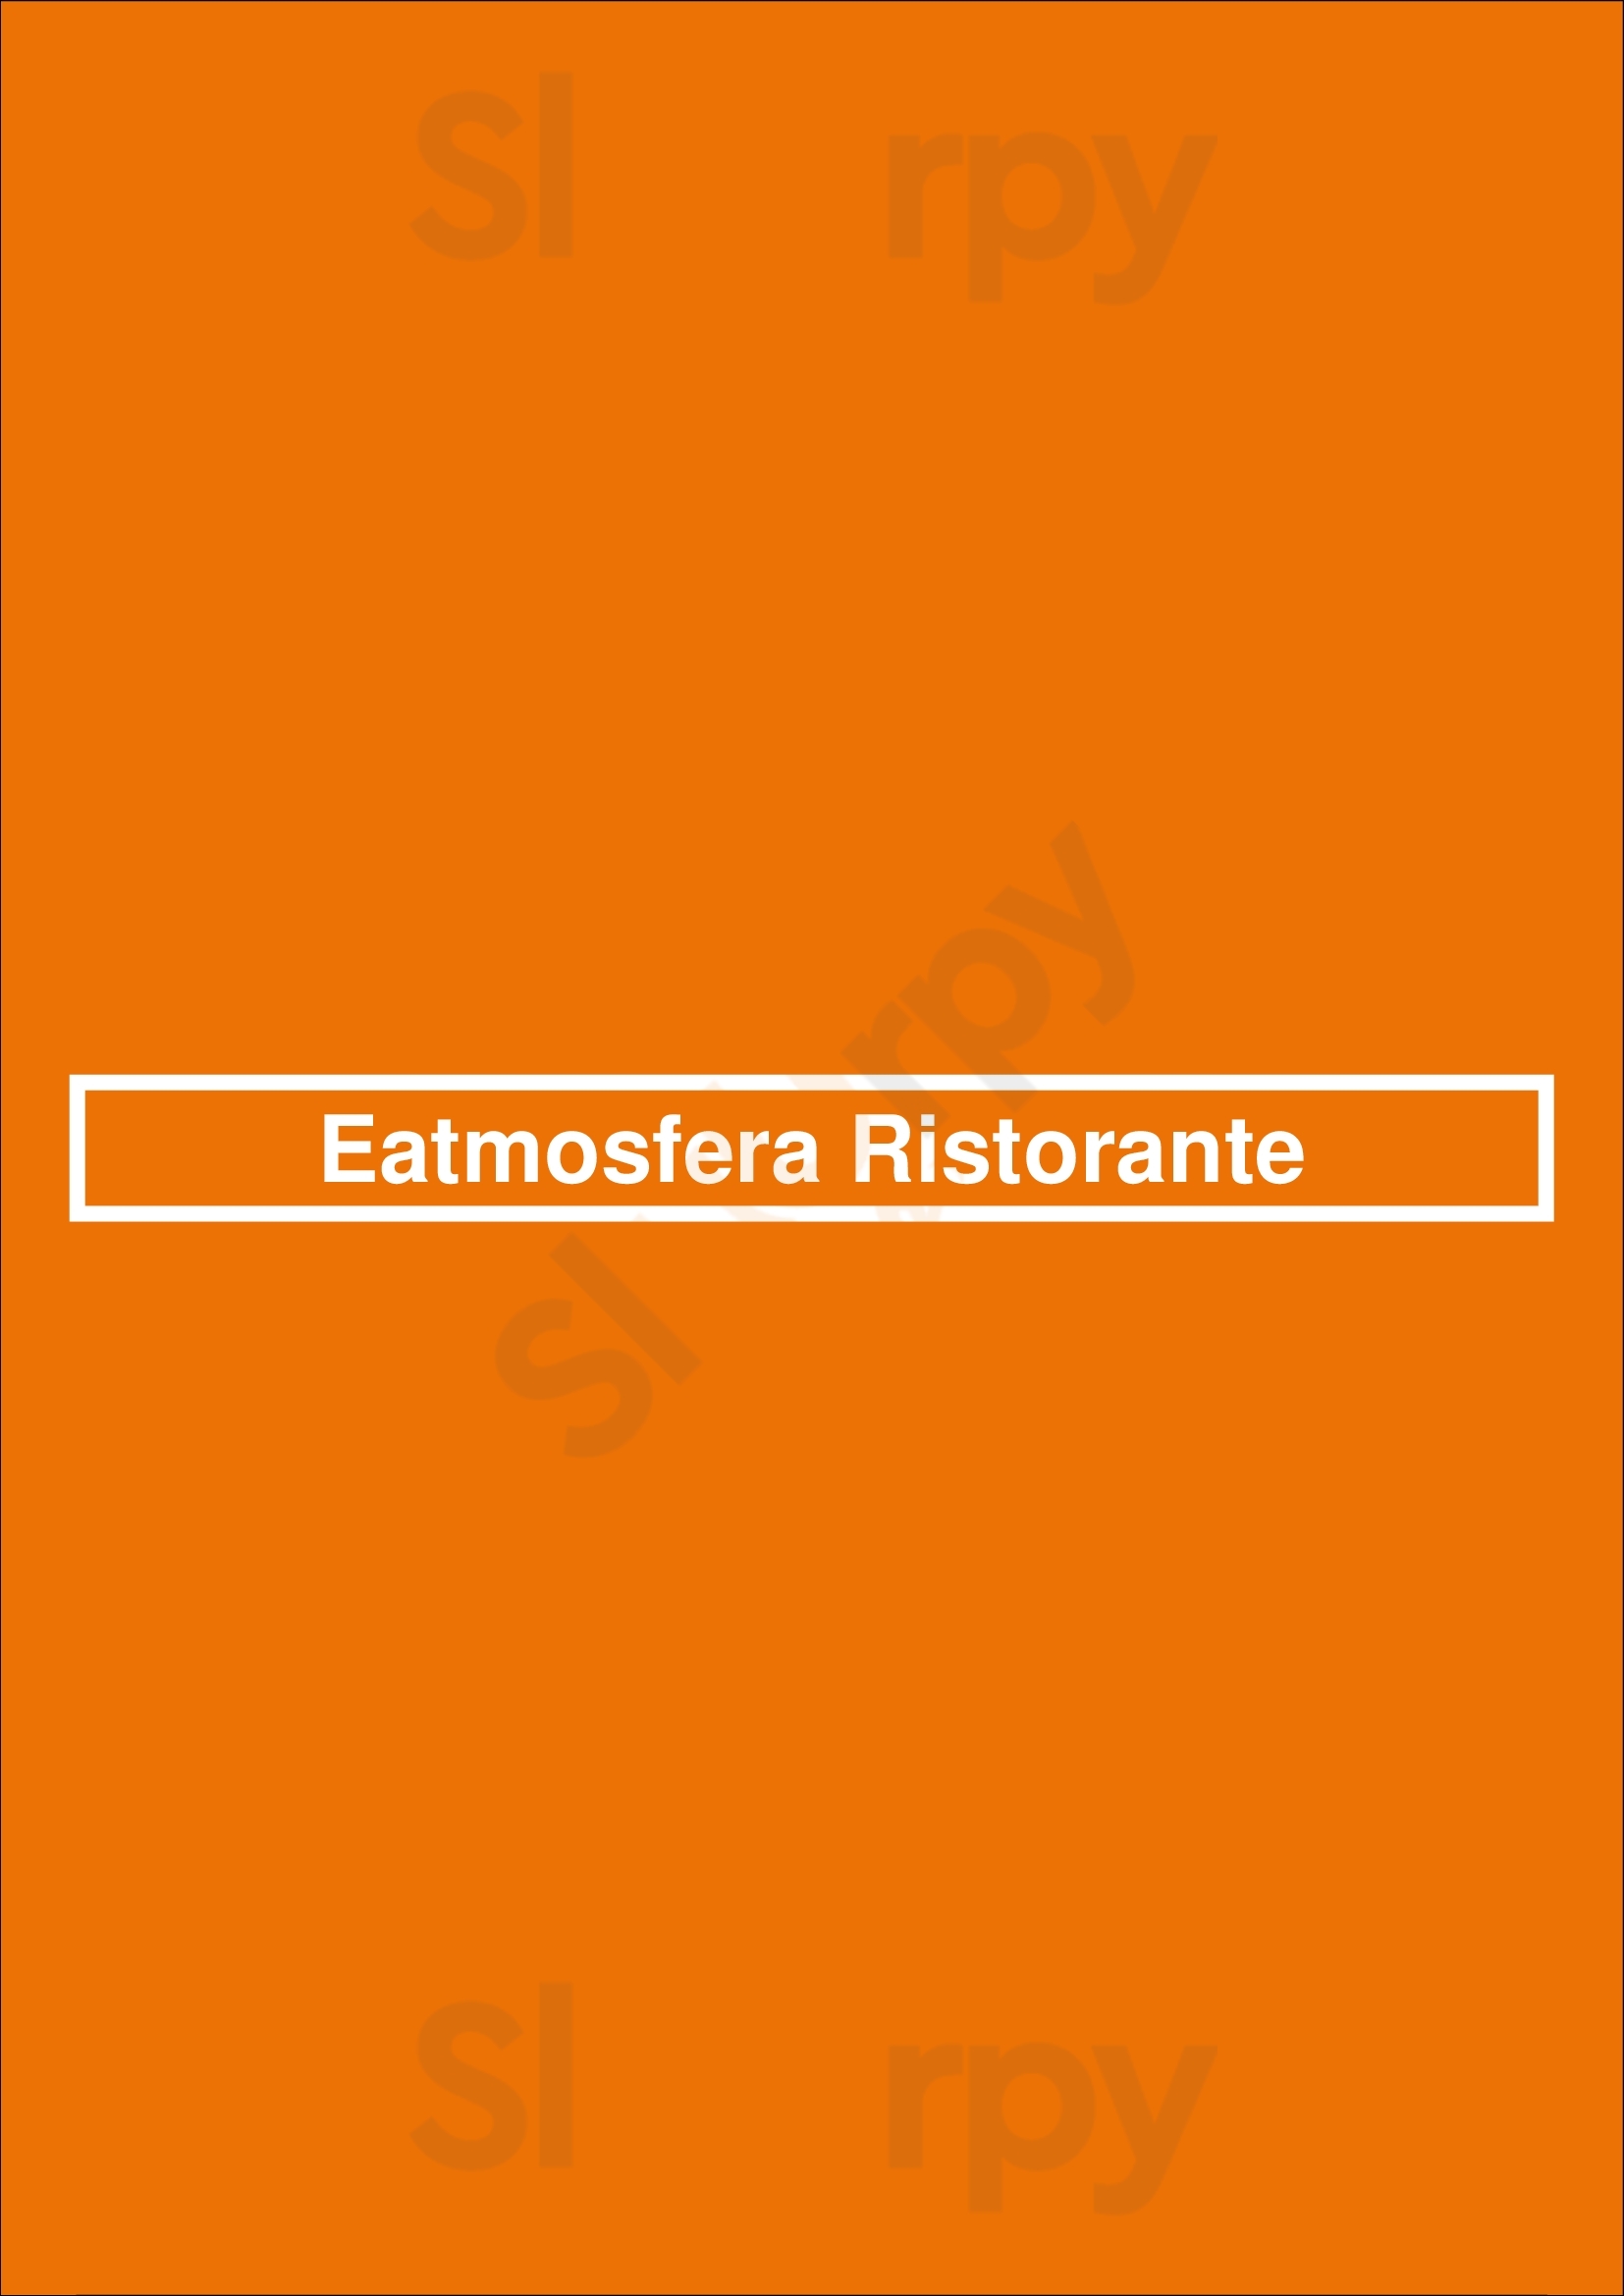 Eatmosfera Ristorante Amsterdam Menu - 1